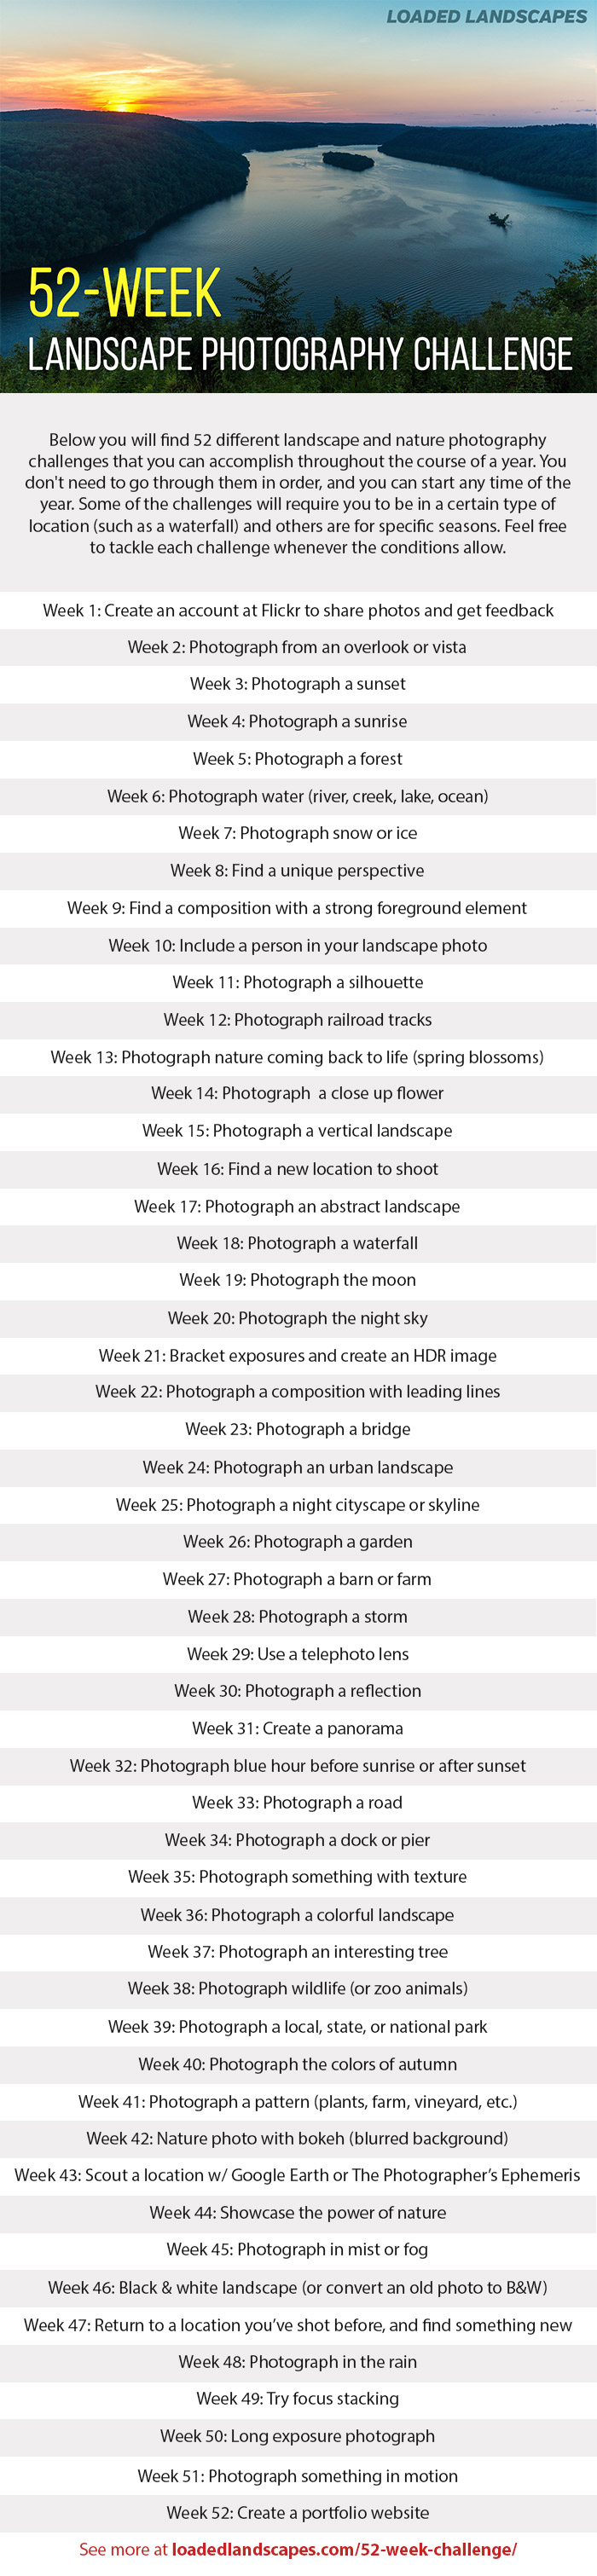 52-Week Landscape Photography Challenge